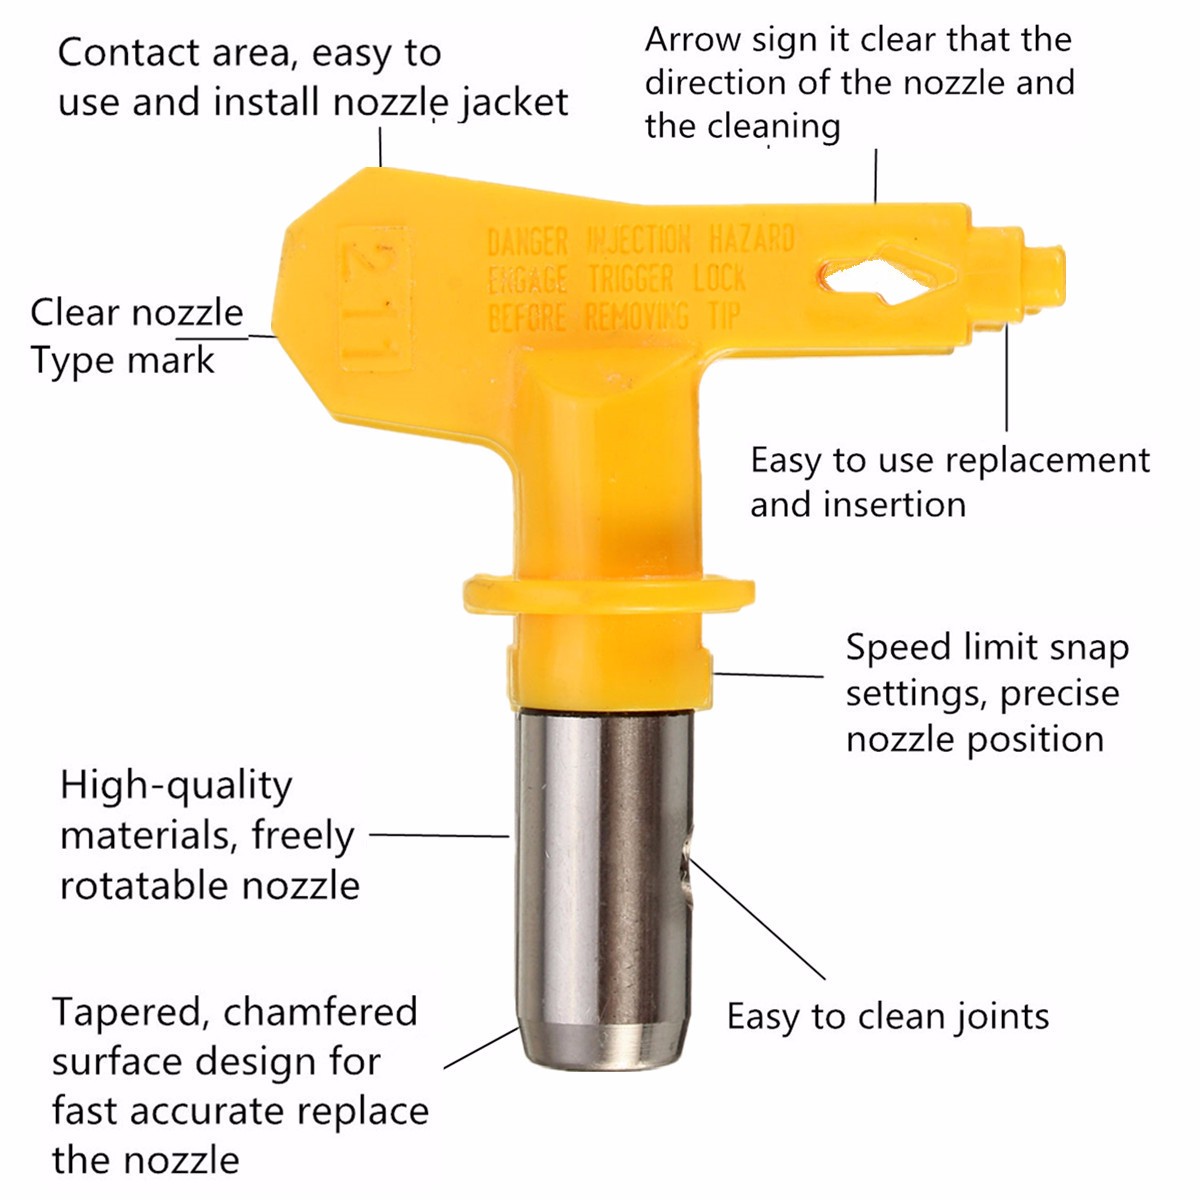 Airless-Spray-Tips-2345-Series-for-Wagner-Titan-Graco-Gun-Paint-Sprayer-Spraying-Gun-Accessories-1101870-1